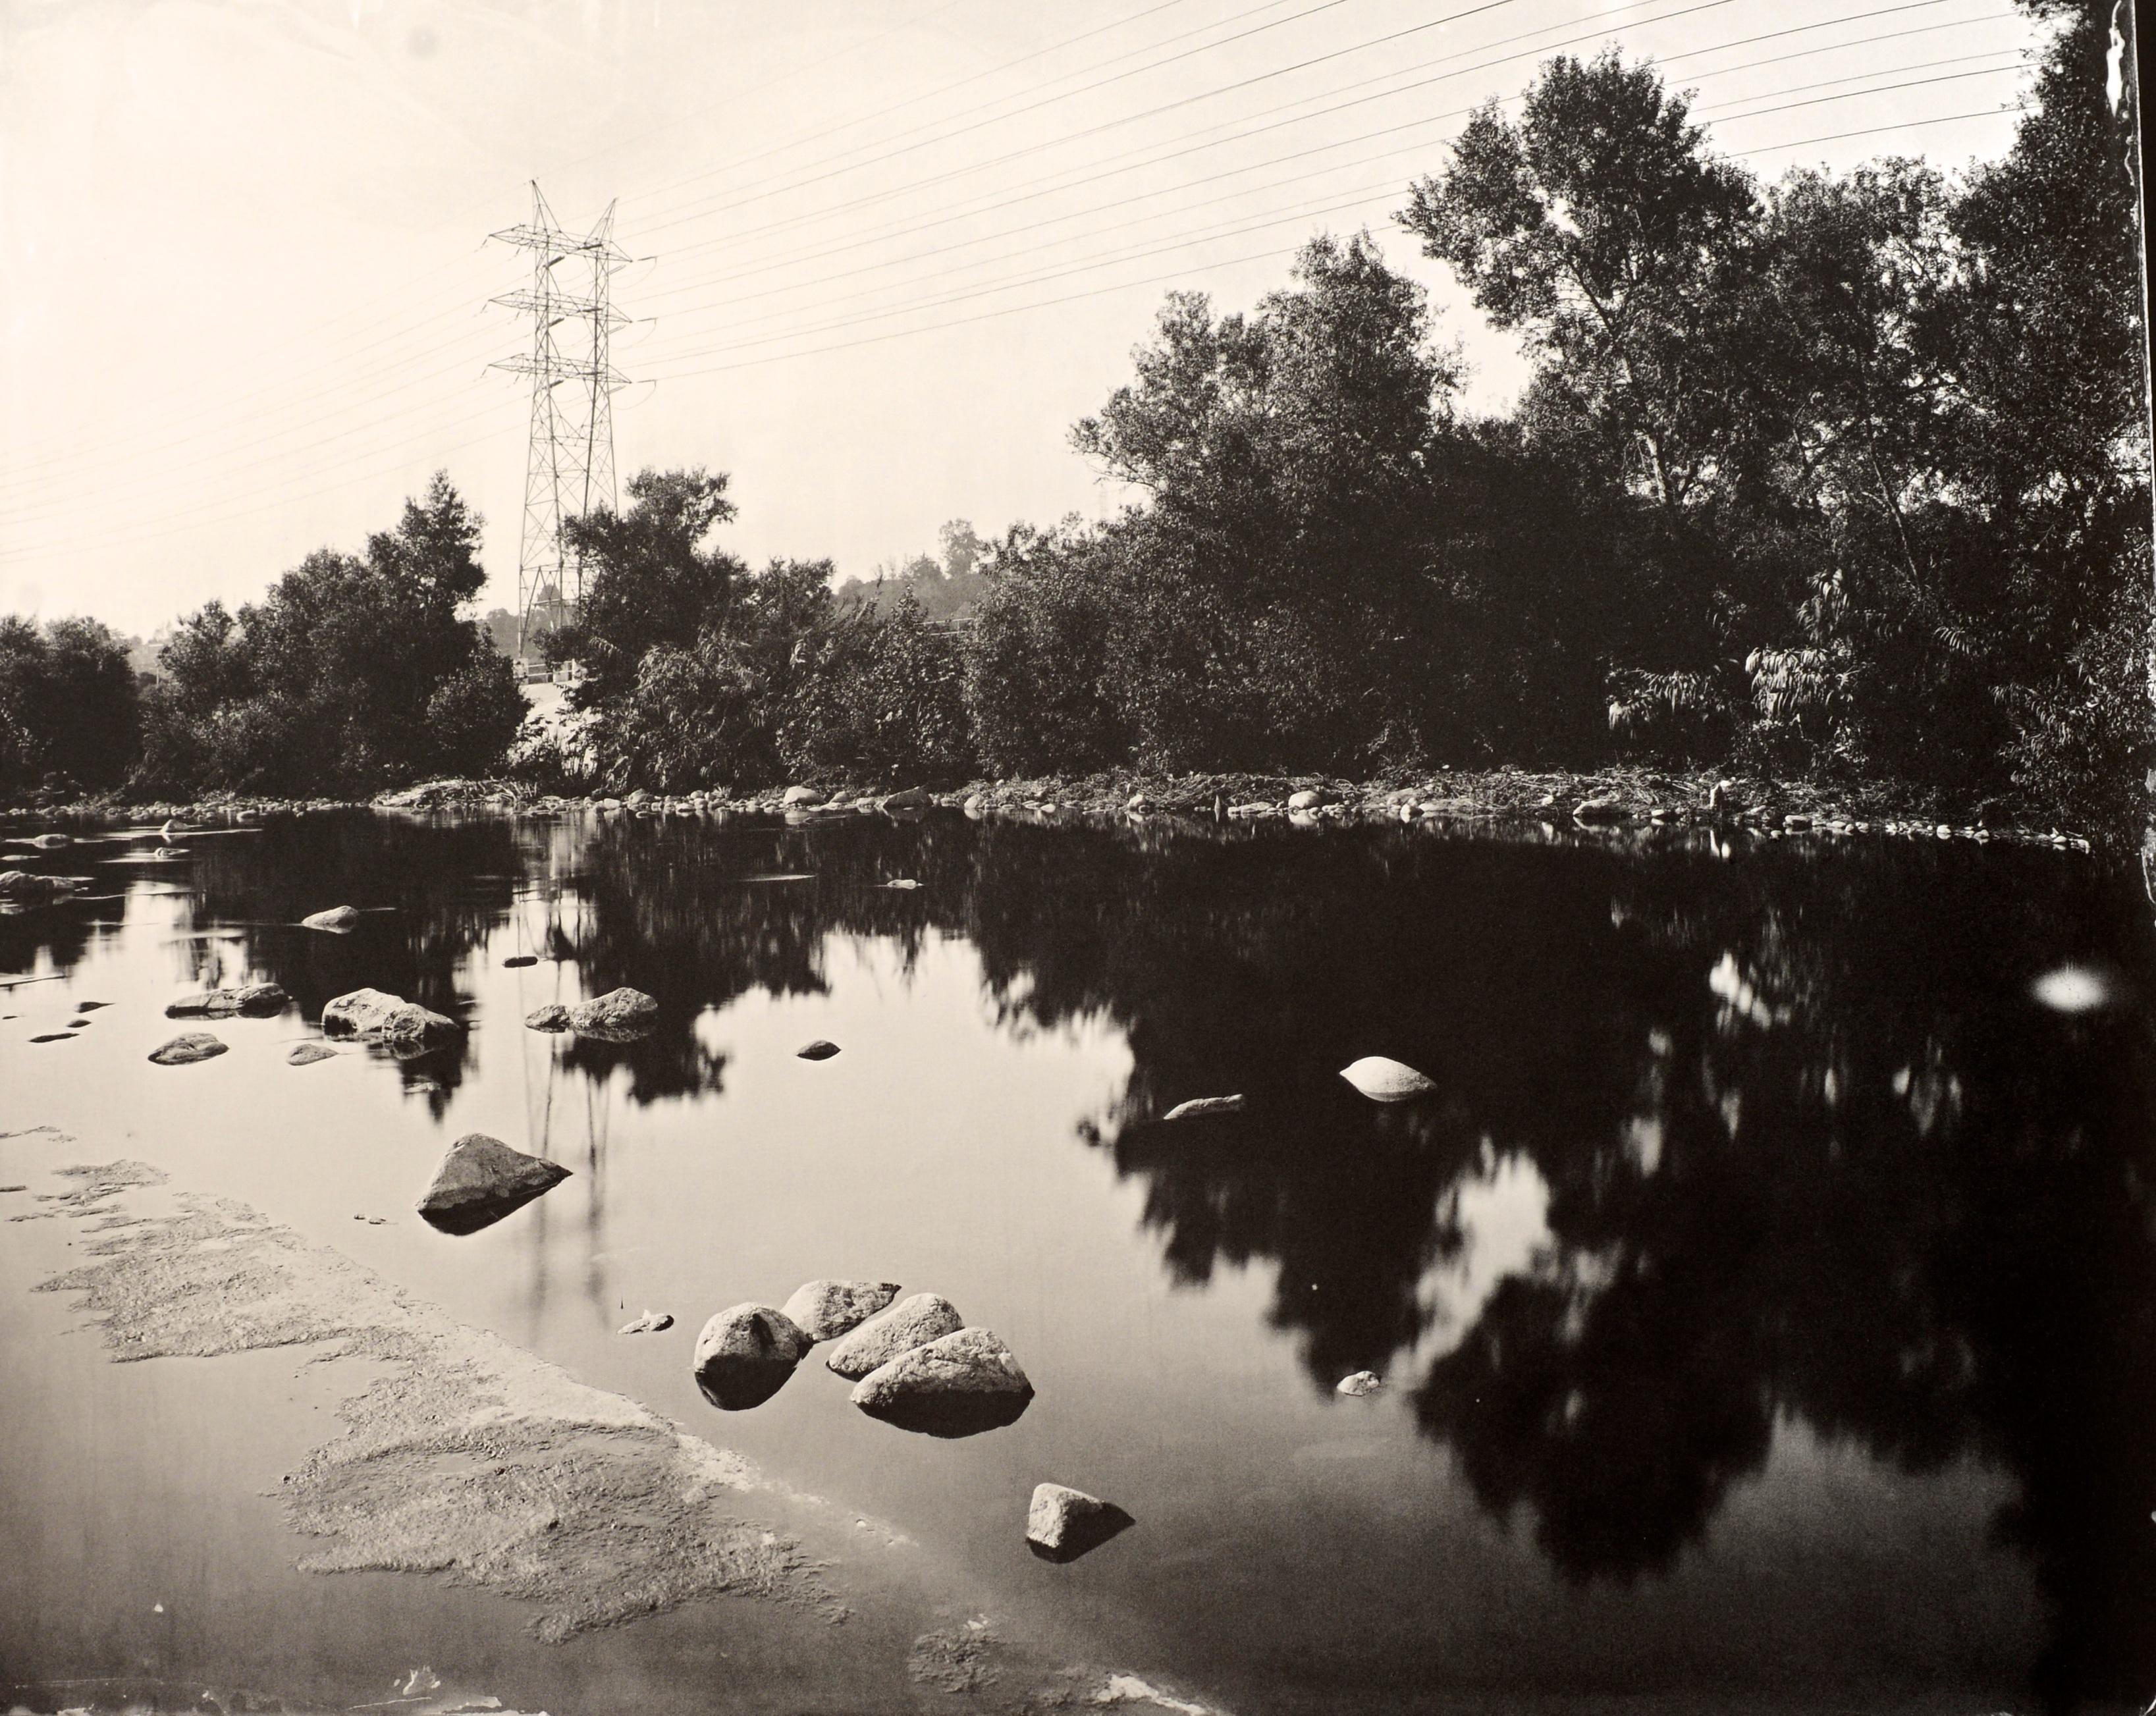 L.A. River, Photos by Michael Kolster, 1st Ed 6